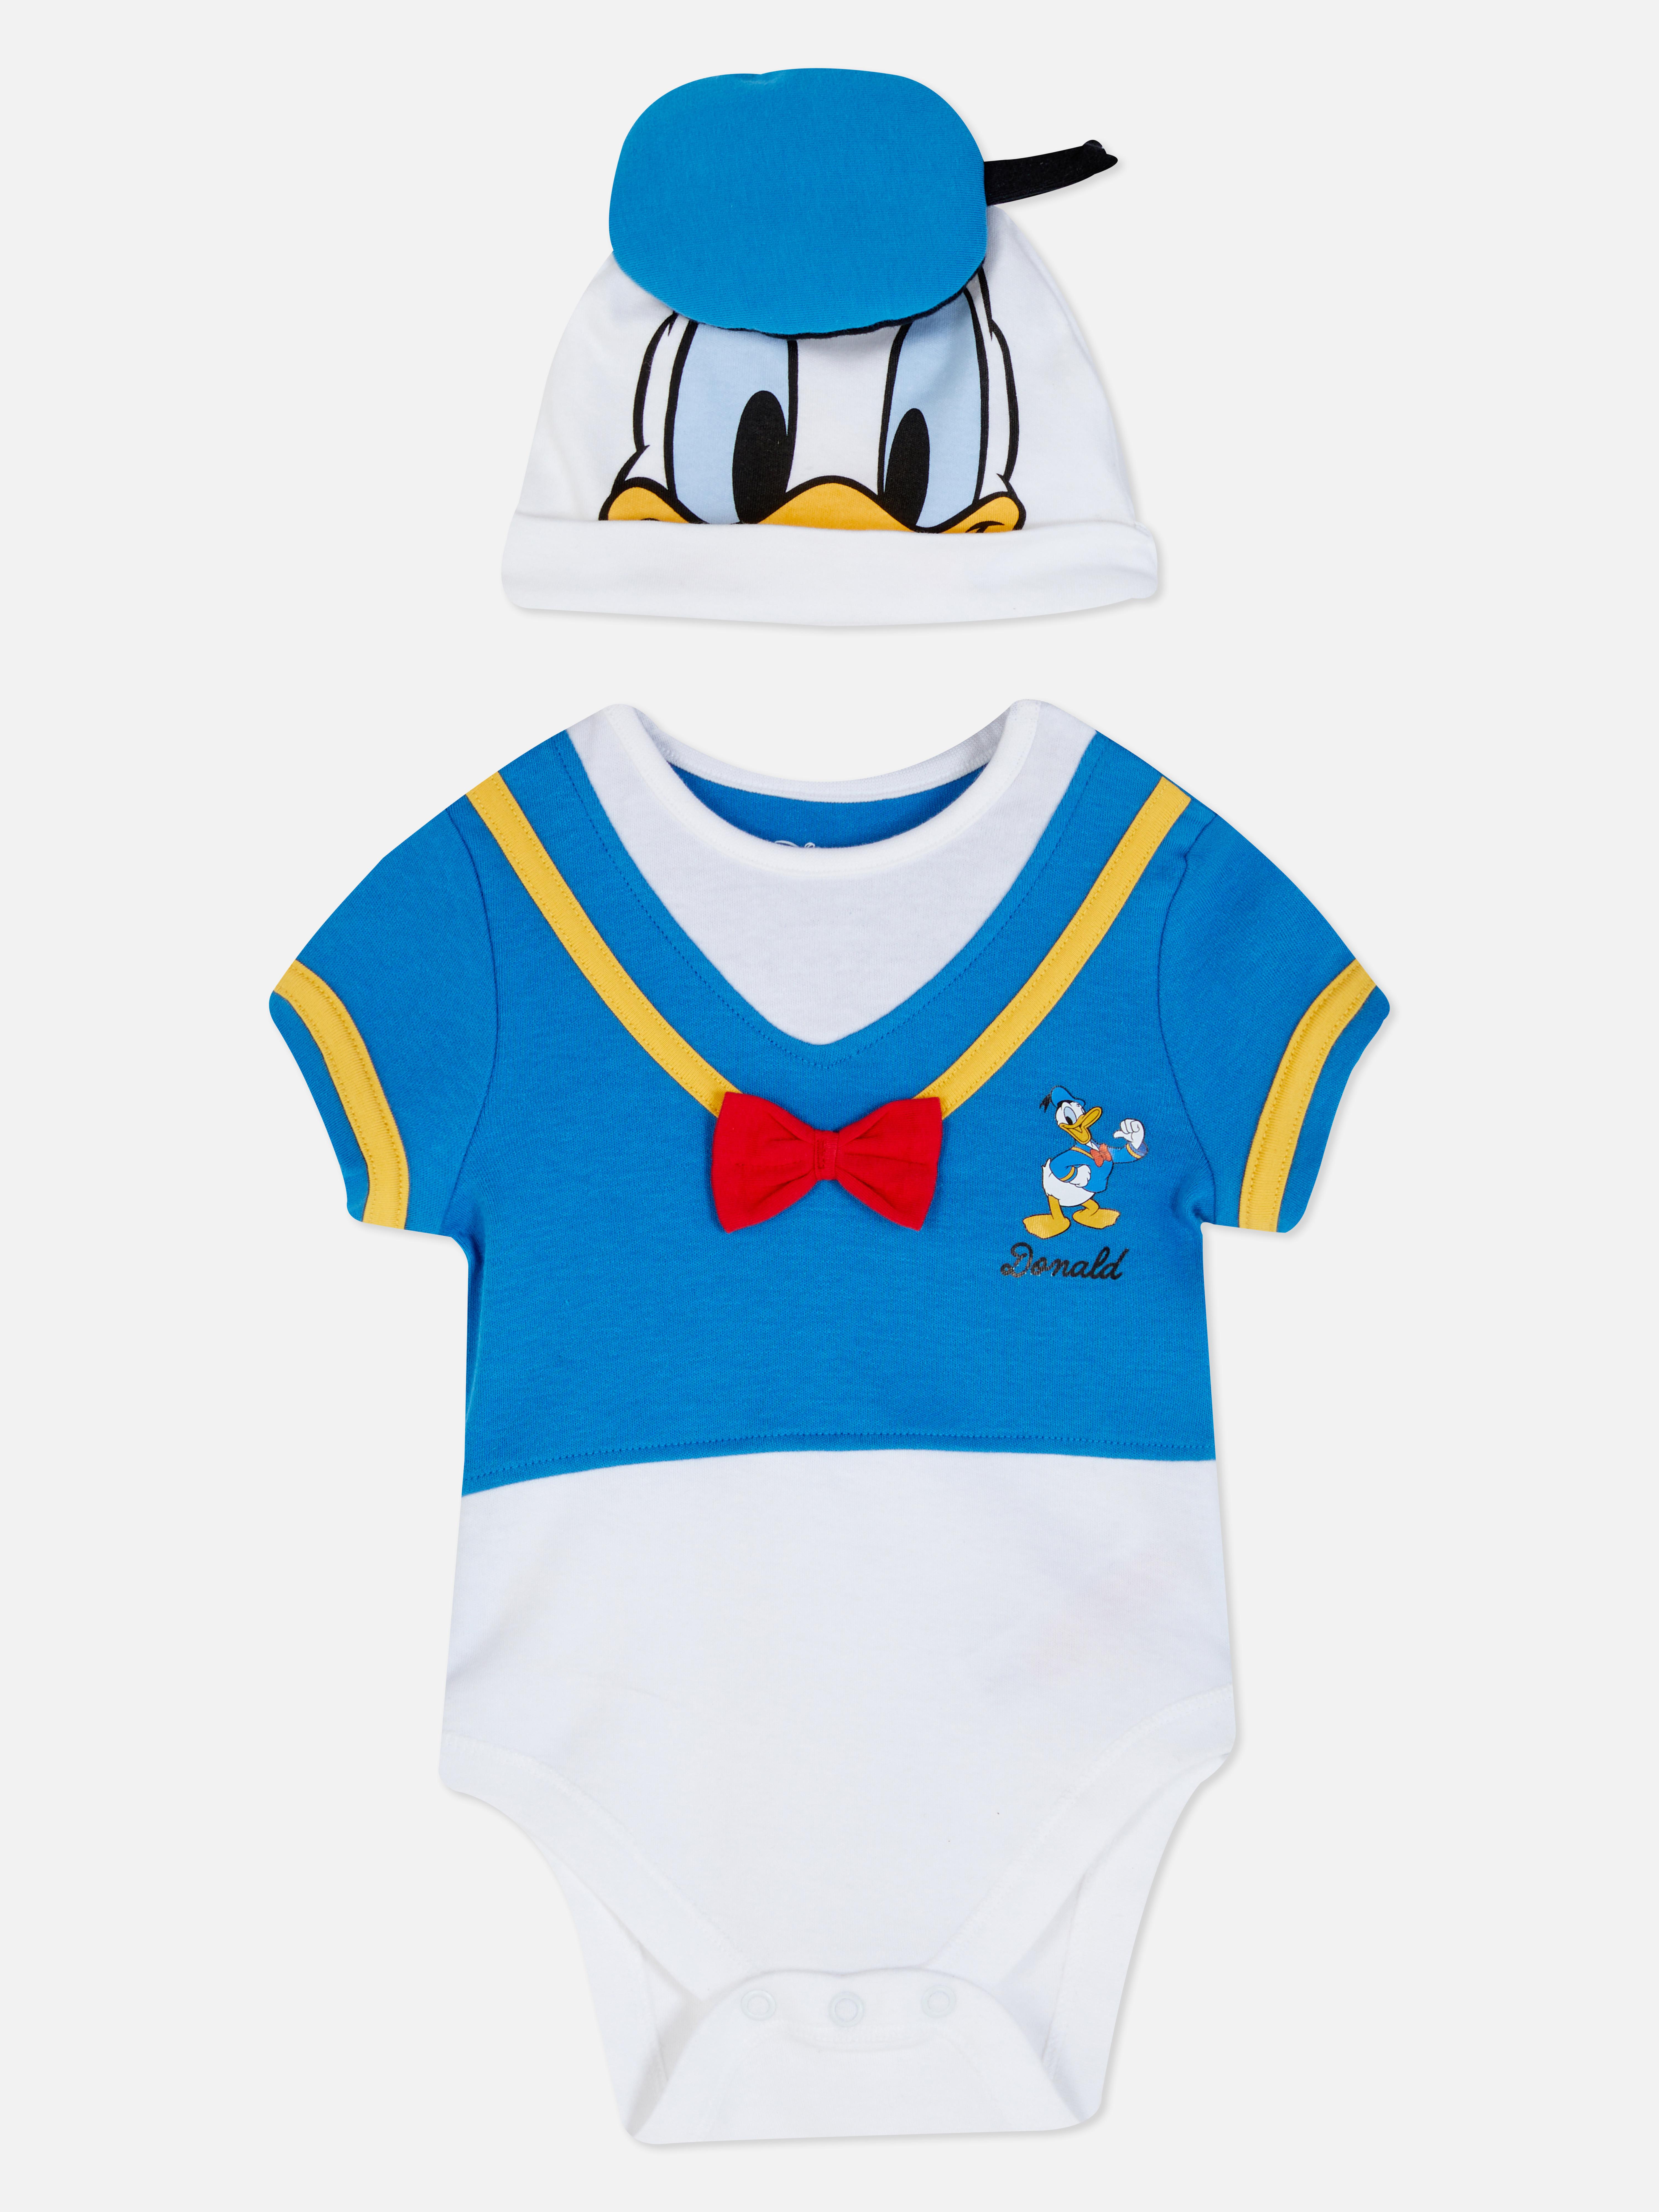 Disney's Donald Duck Dress Up Set